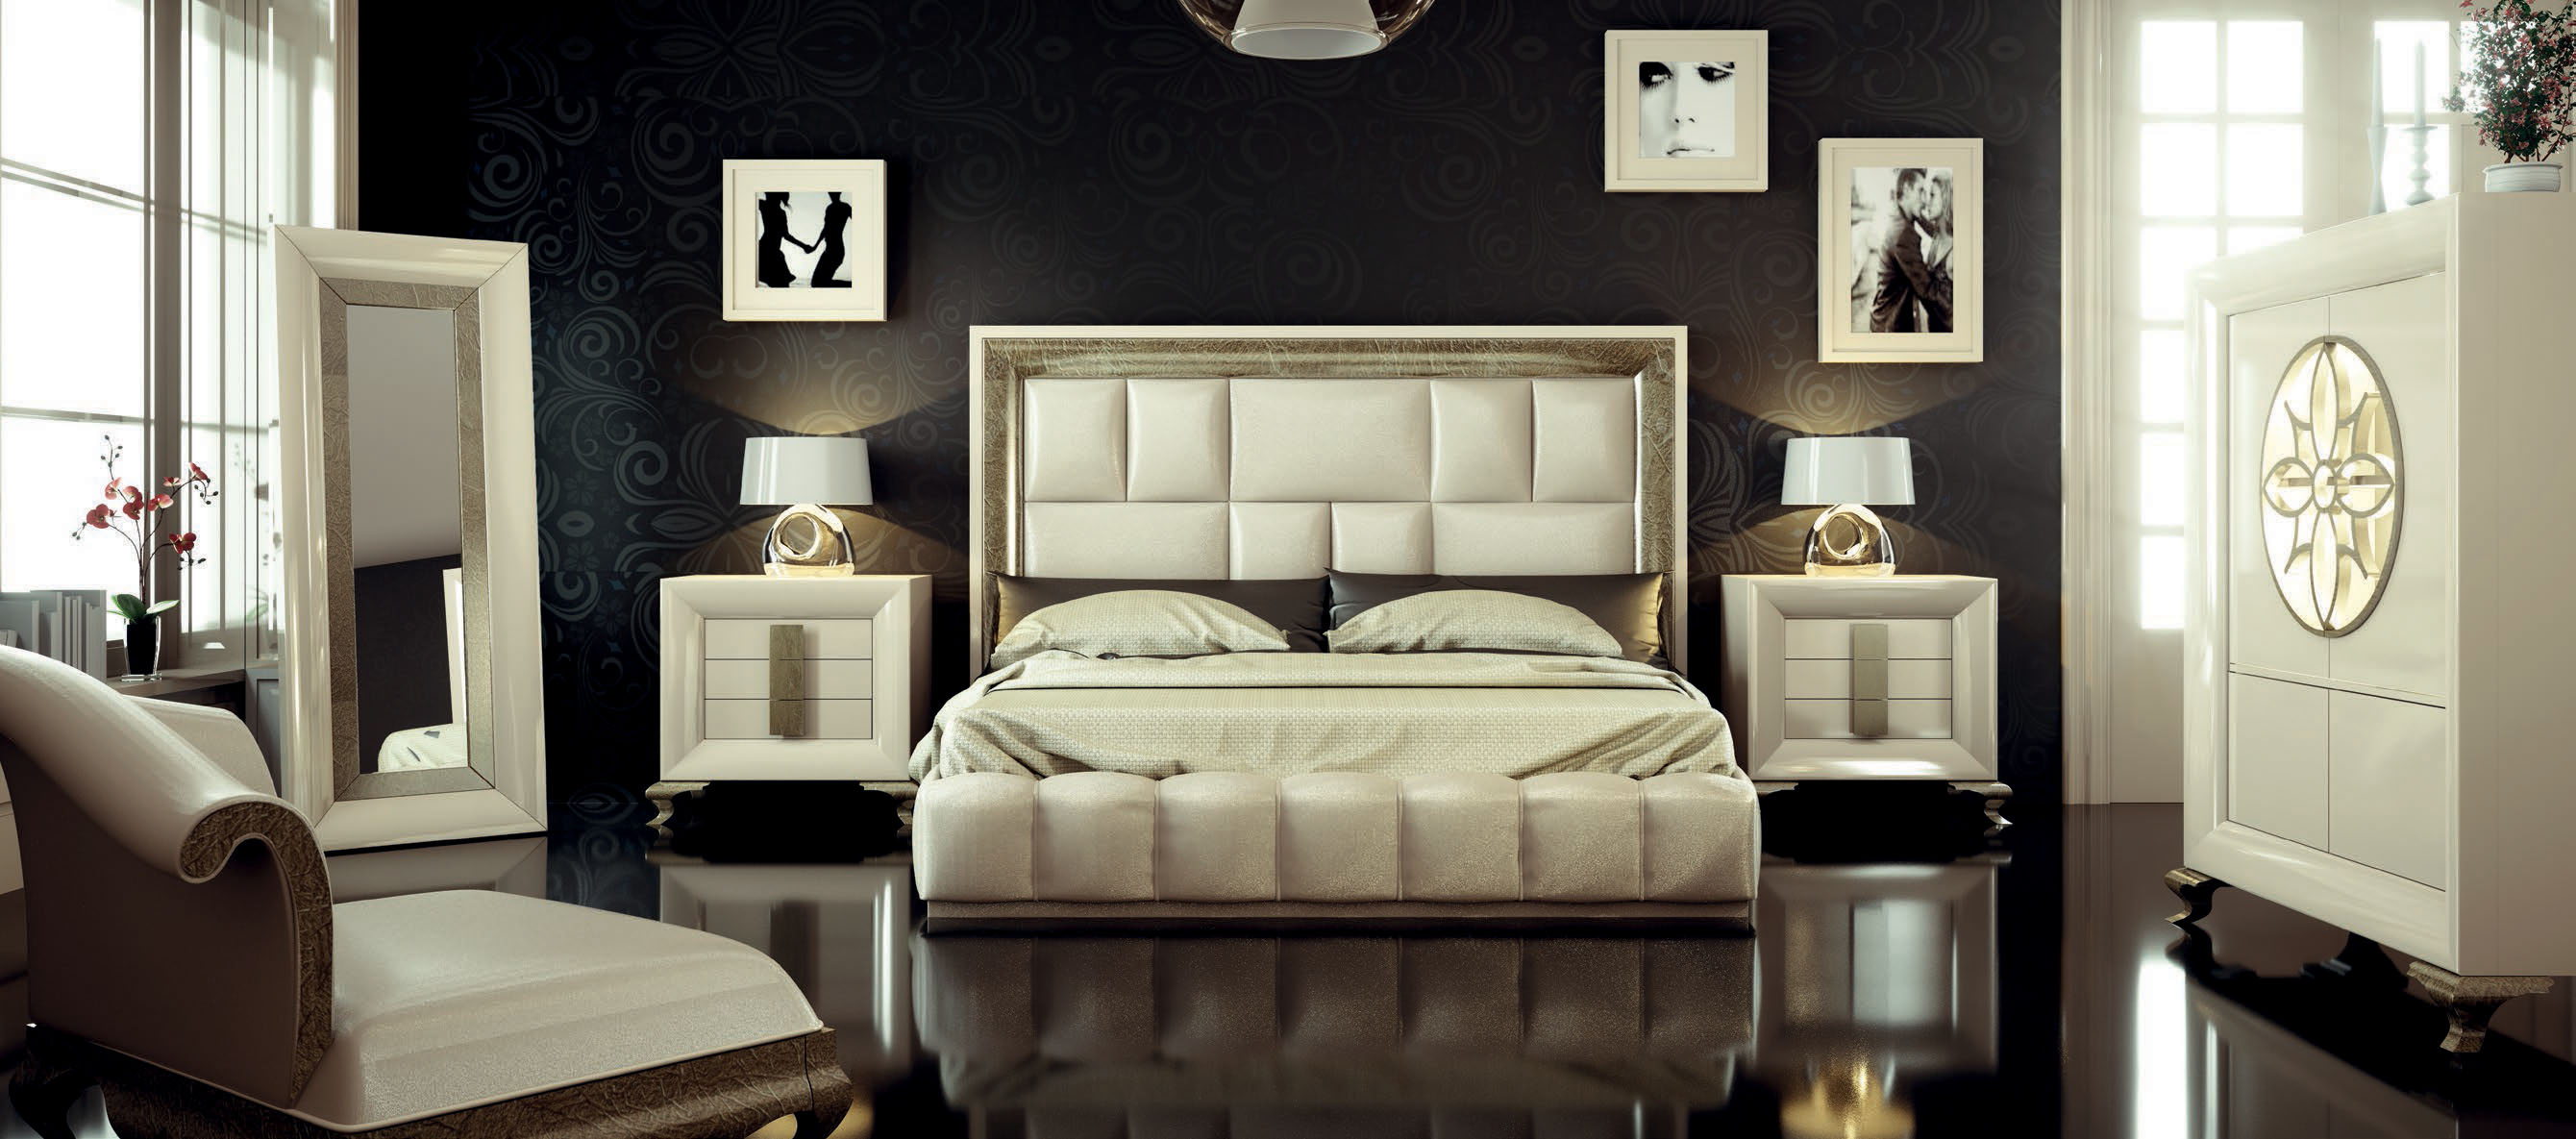 Brands Franco Furniture Bedrooms vol1, Spain DOR 148